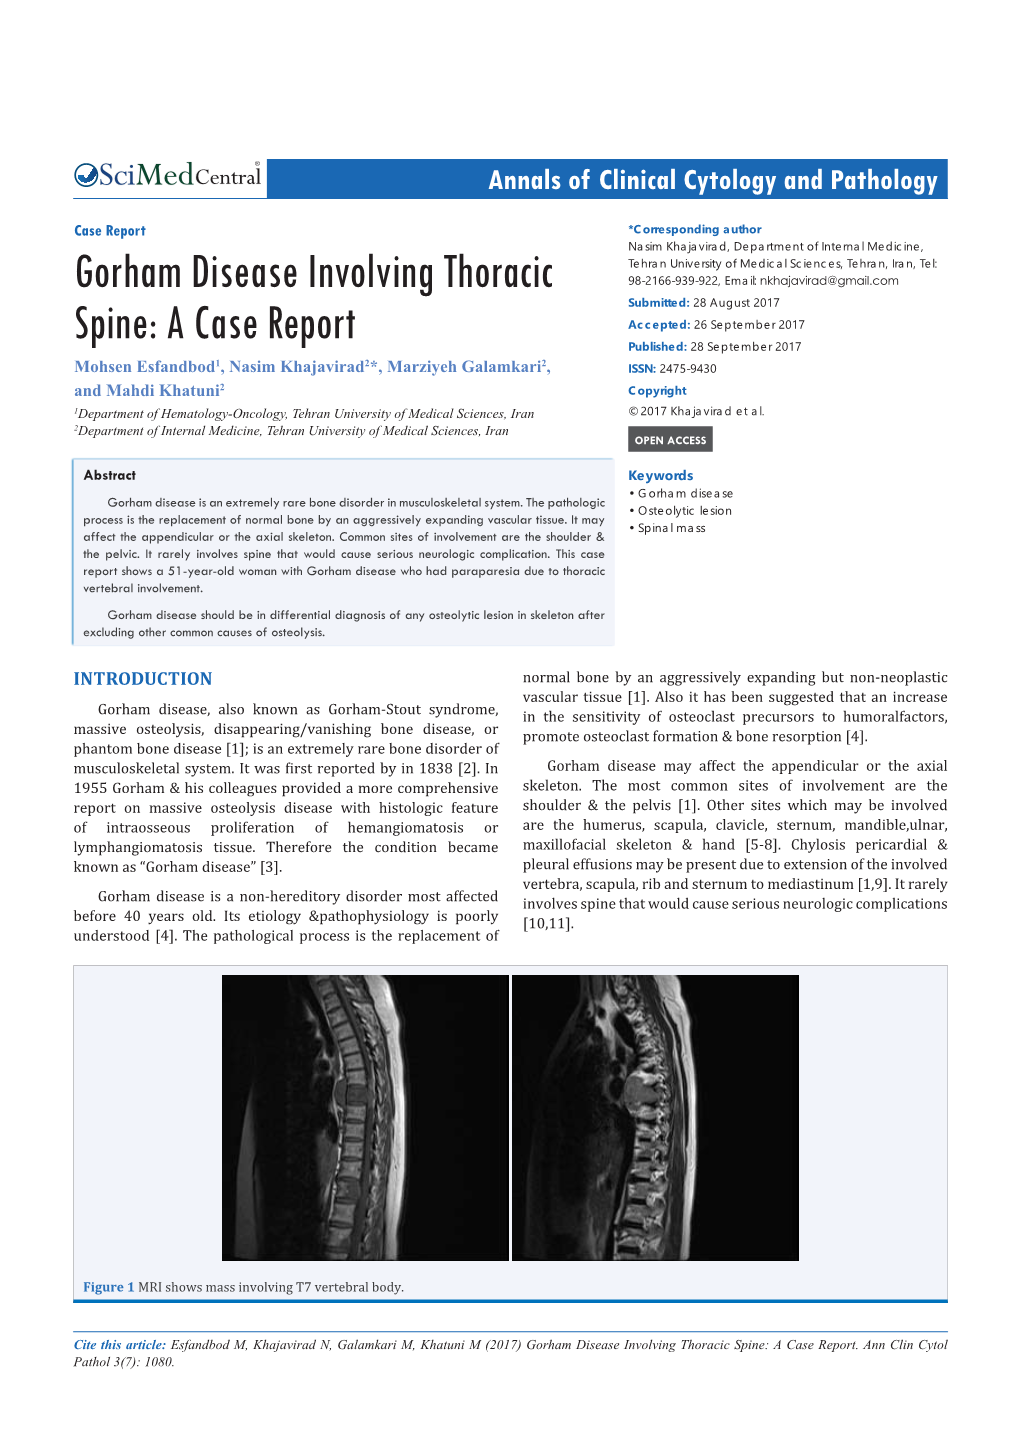 Gorham Disease Involving Thoracic Spine: a Case Report